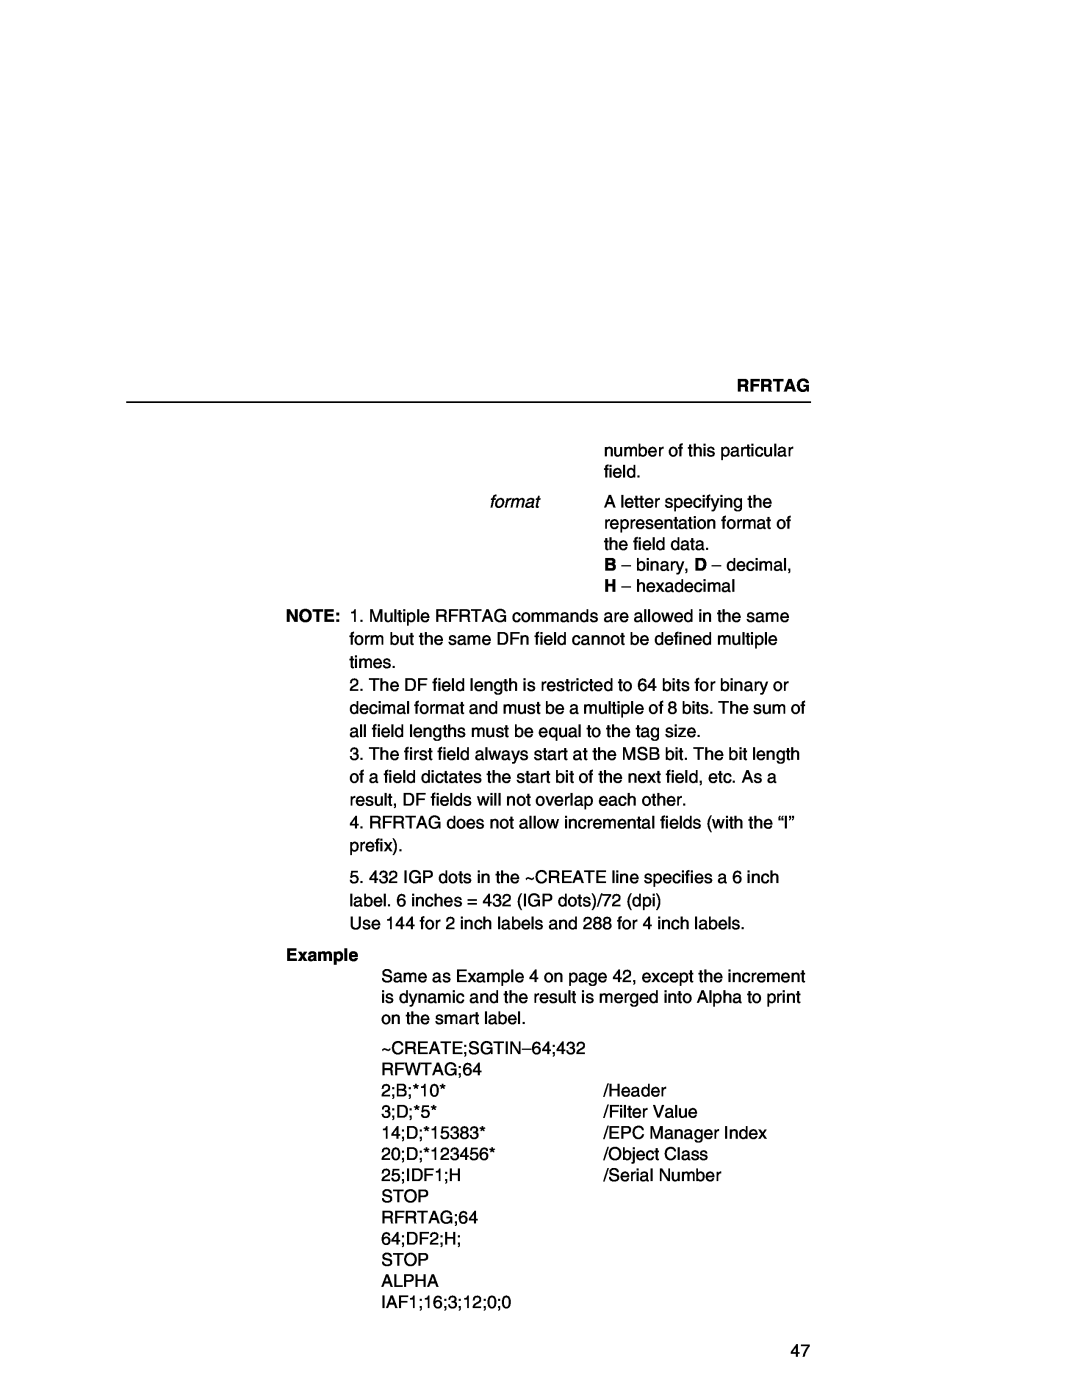 Printronix SL5000r MP manual Rfrtag, format, Example 